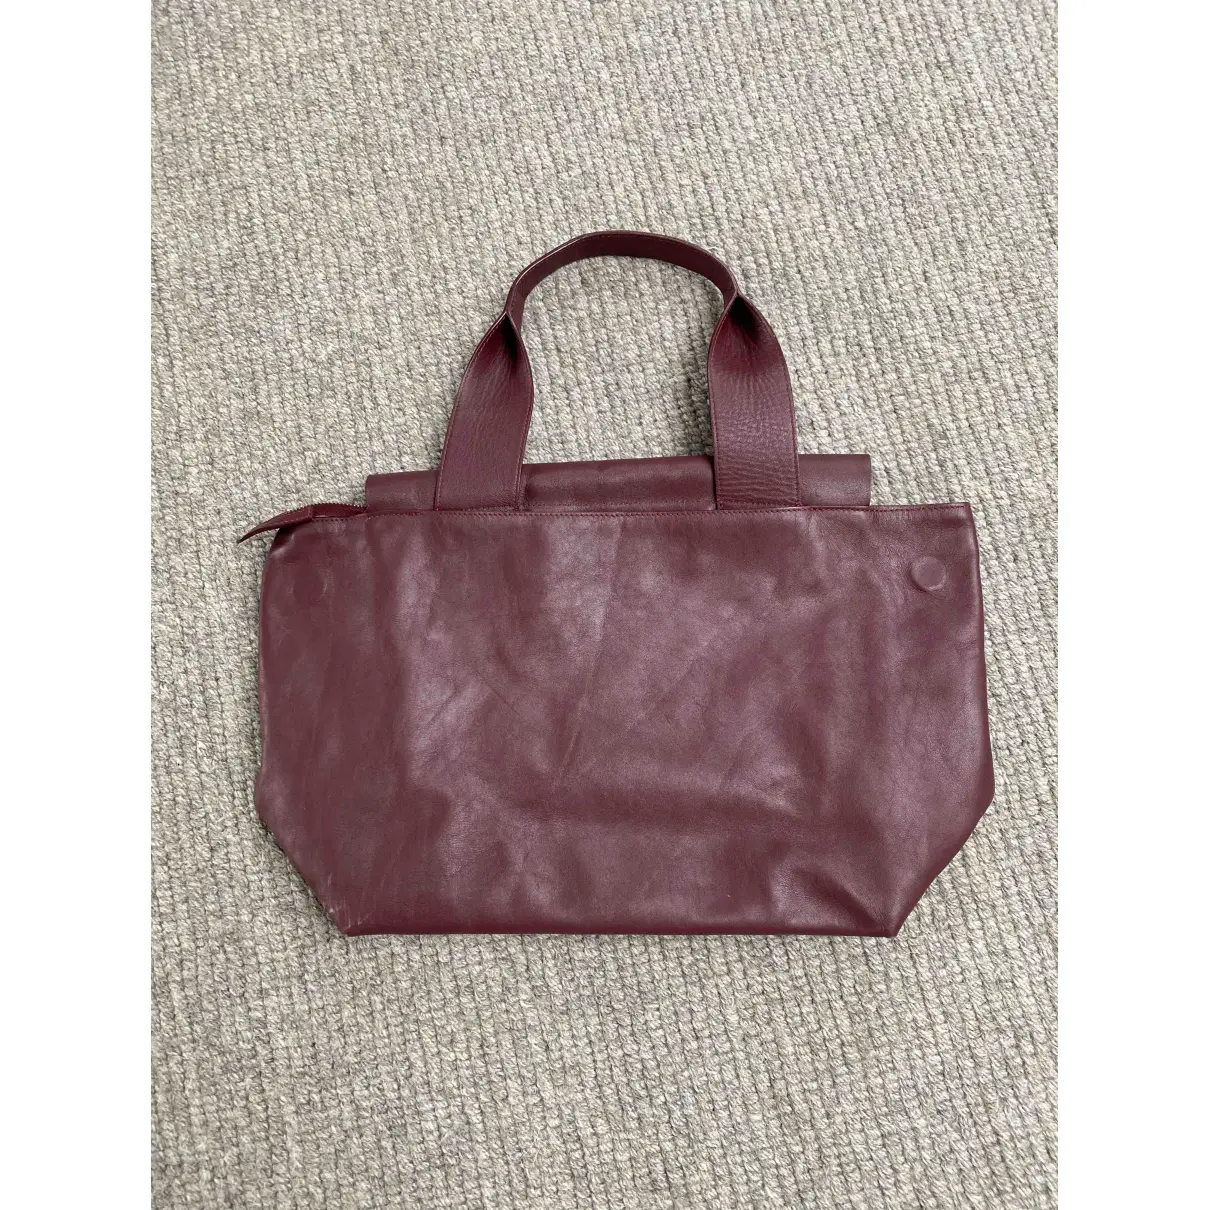 Buy Cos Leather handbag online